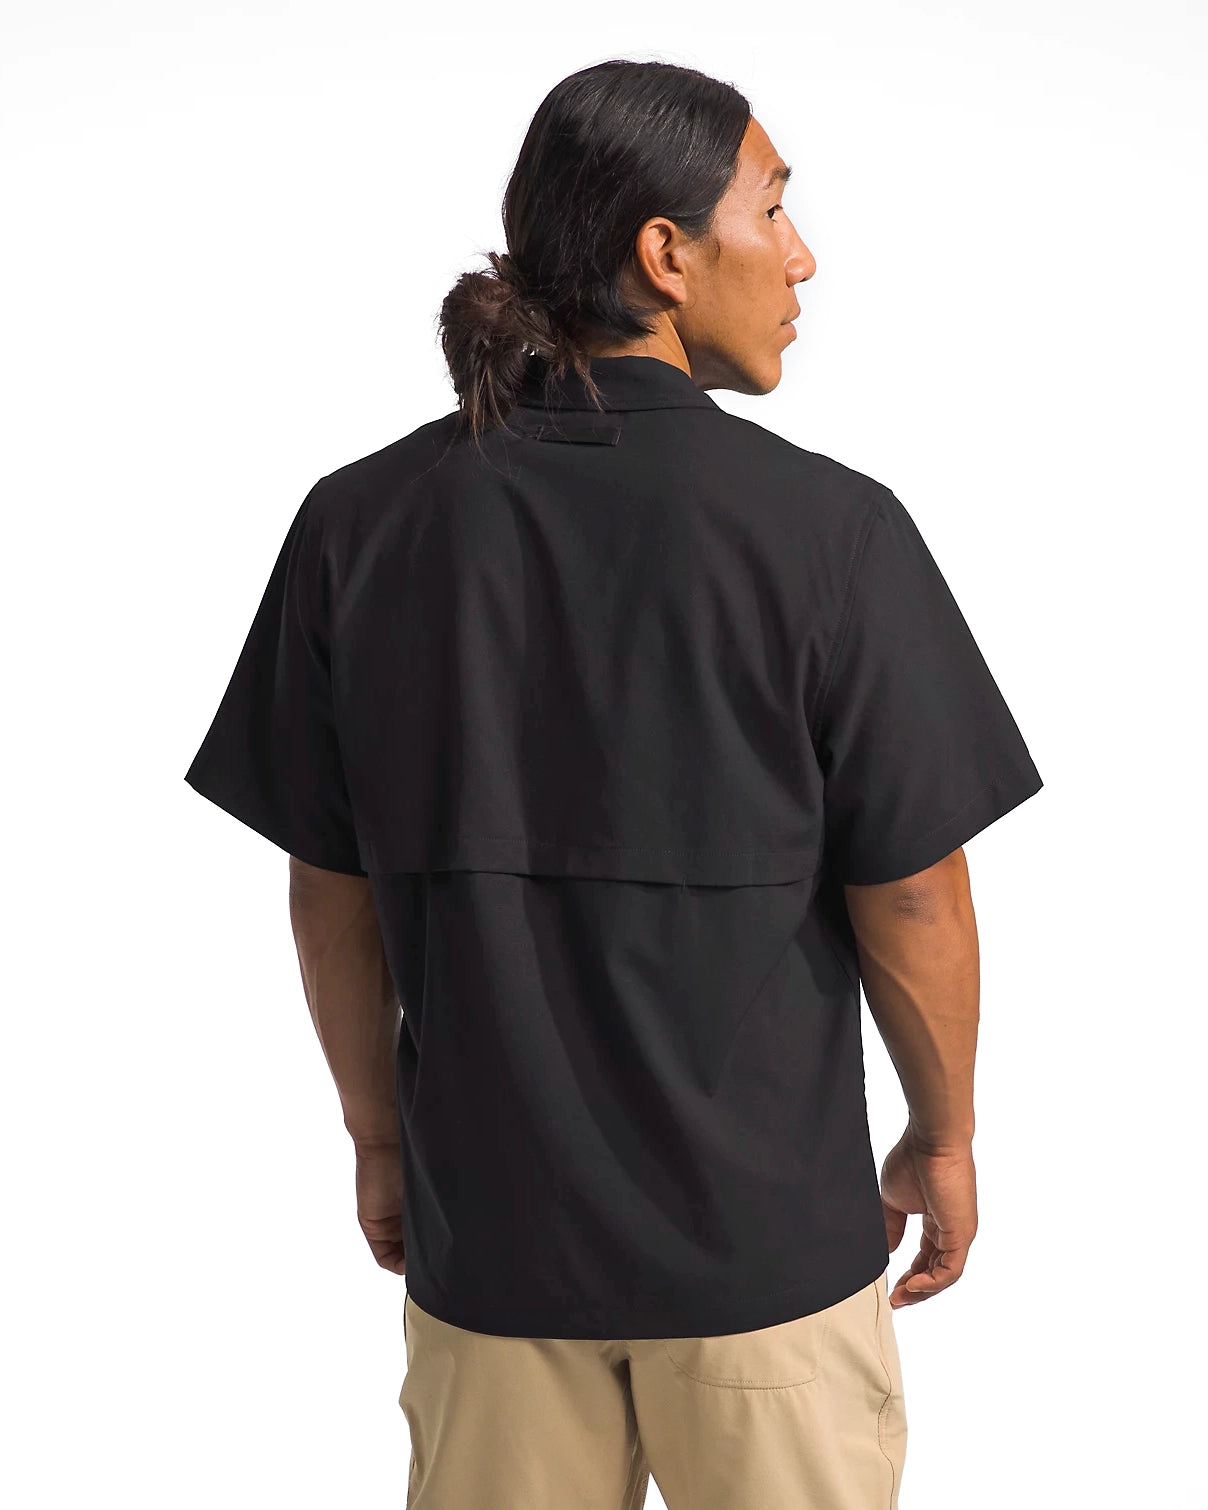 Men’s First Trail Short-Sleeve Shirt - TNF Black